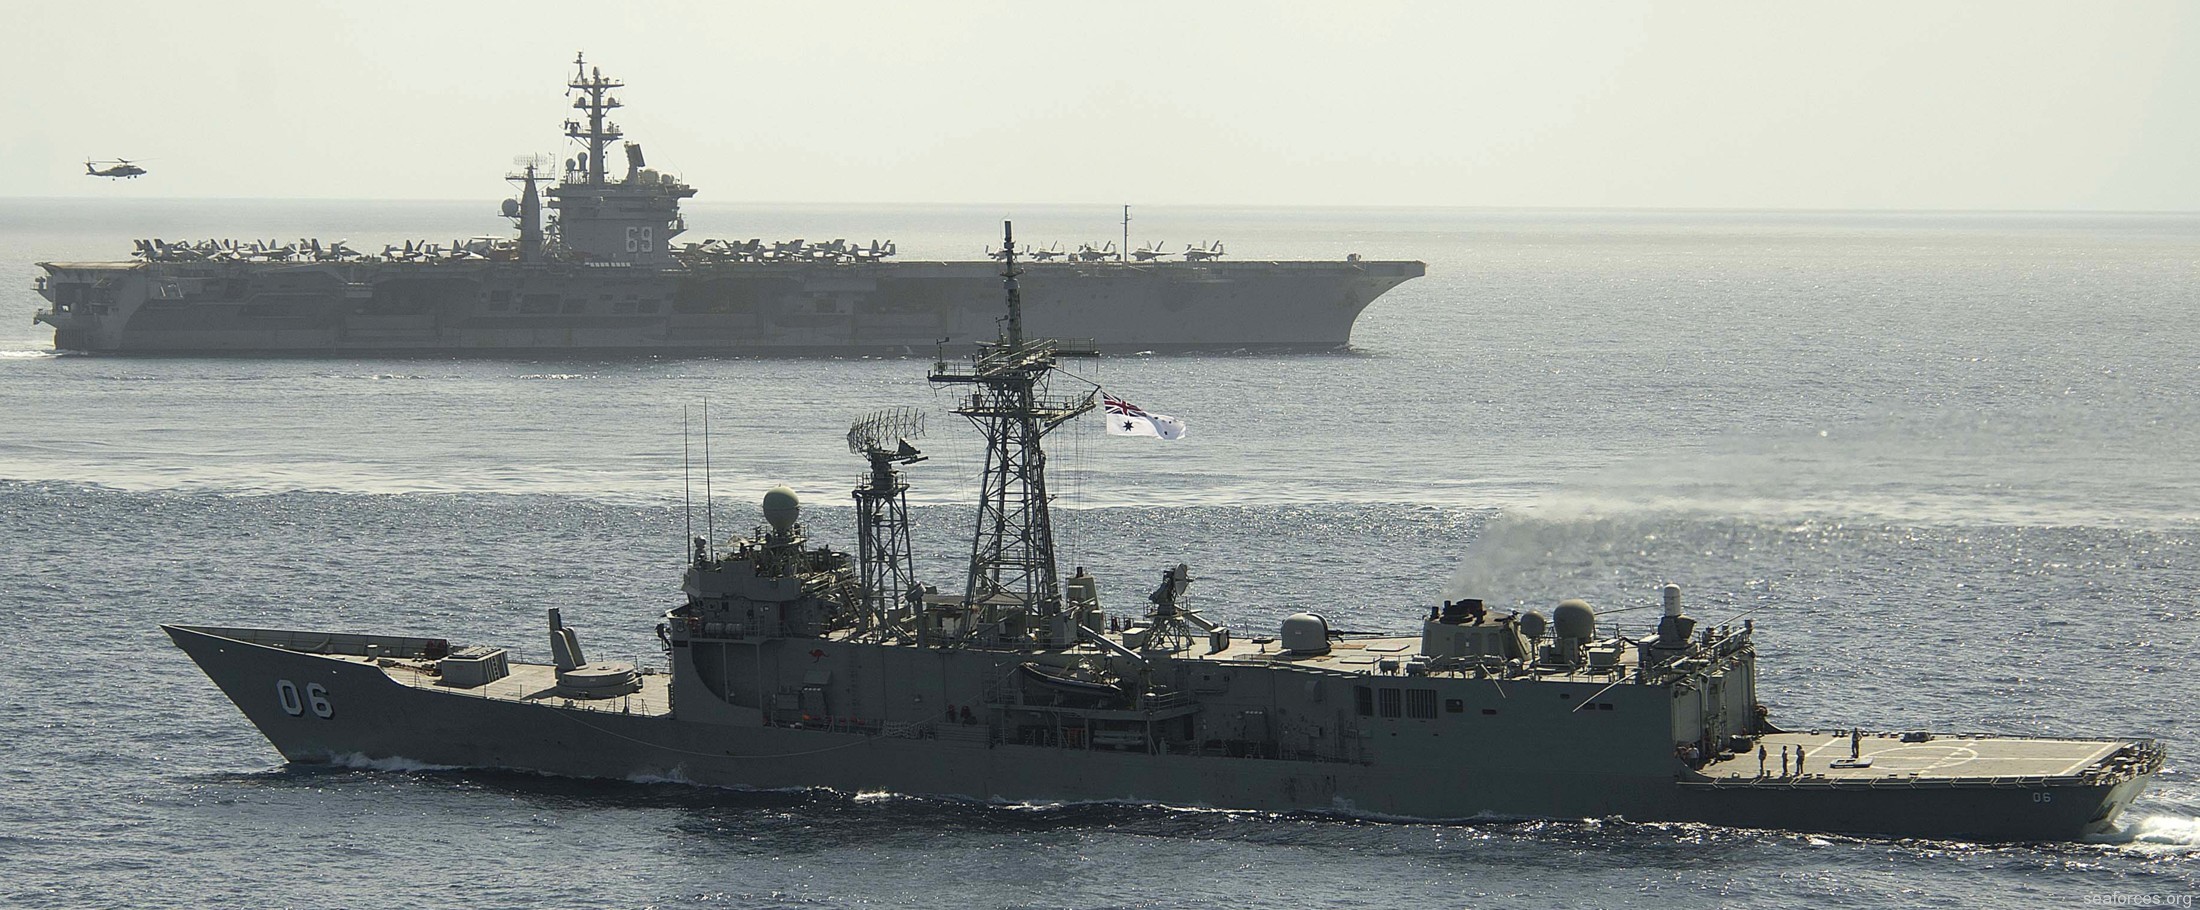 ffg-06 hmas newcastle adelaide class frigate royal australian navy 2013 24 arabian sea